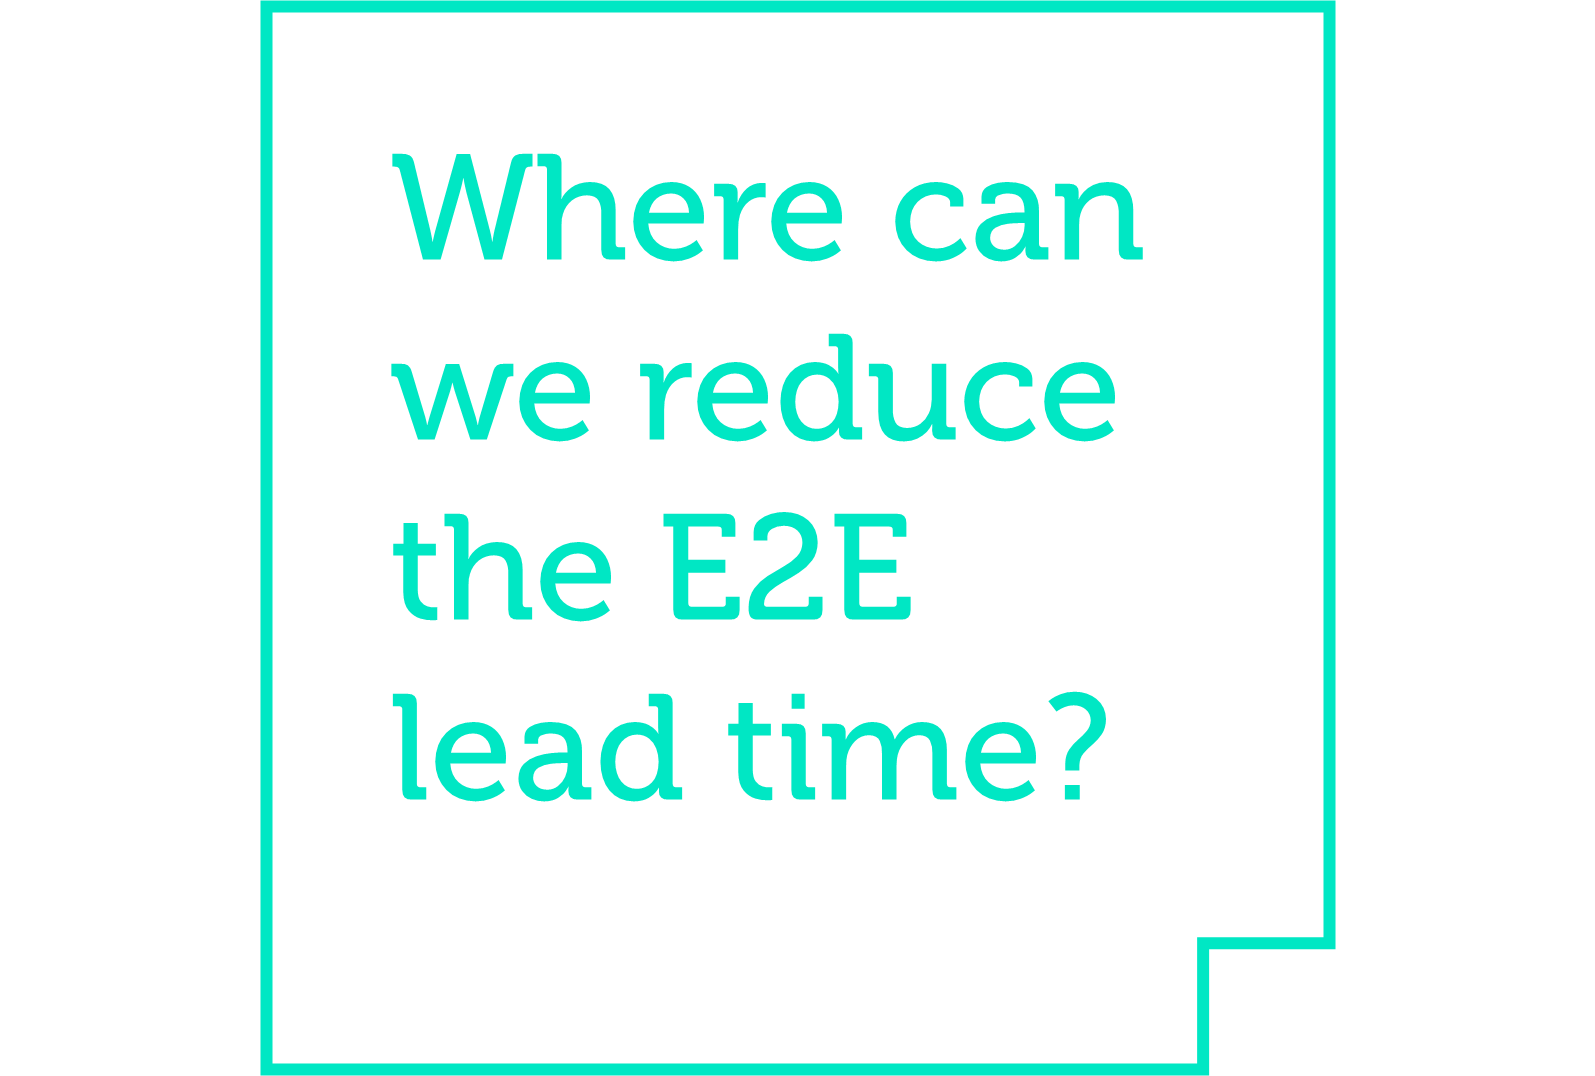 Axon: Where can we reduce the E2E lead time?